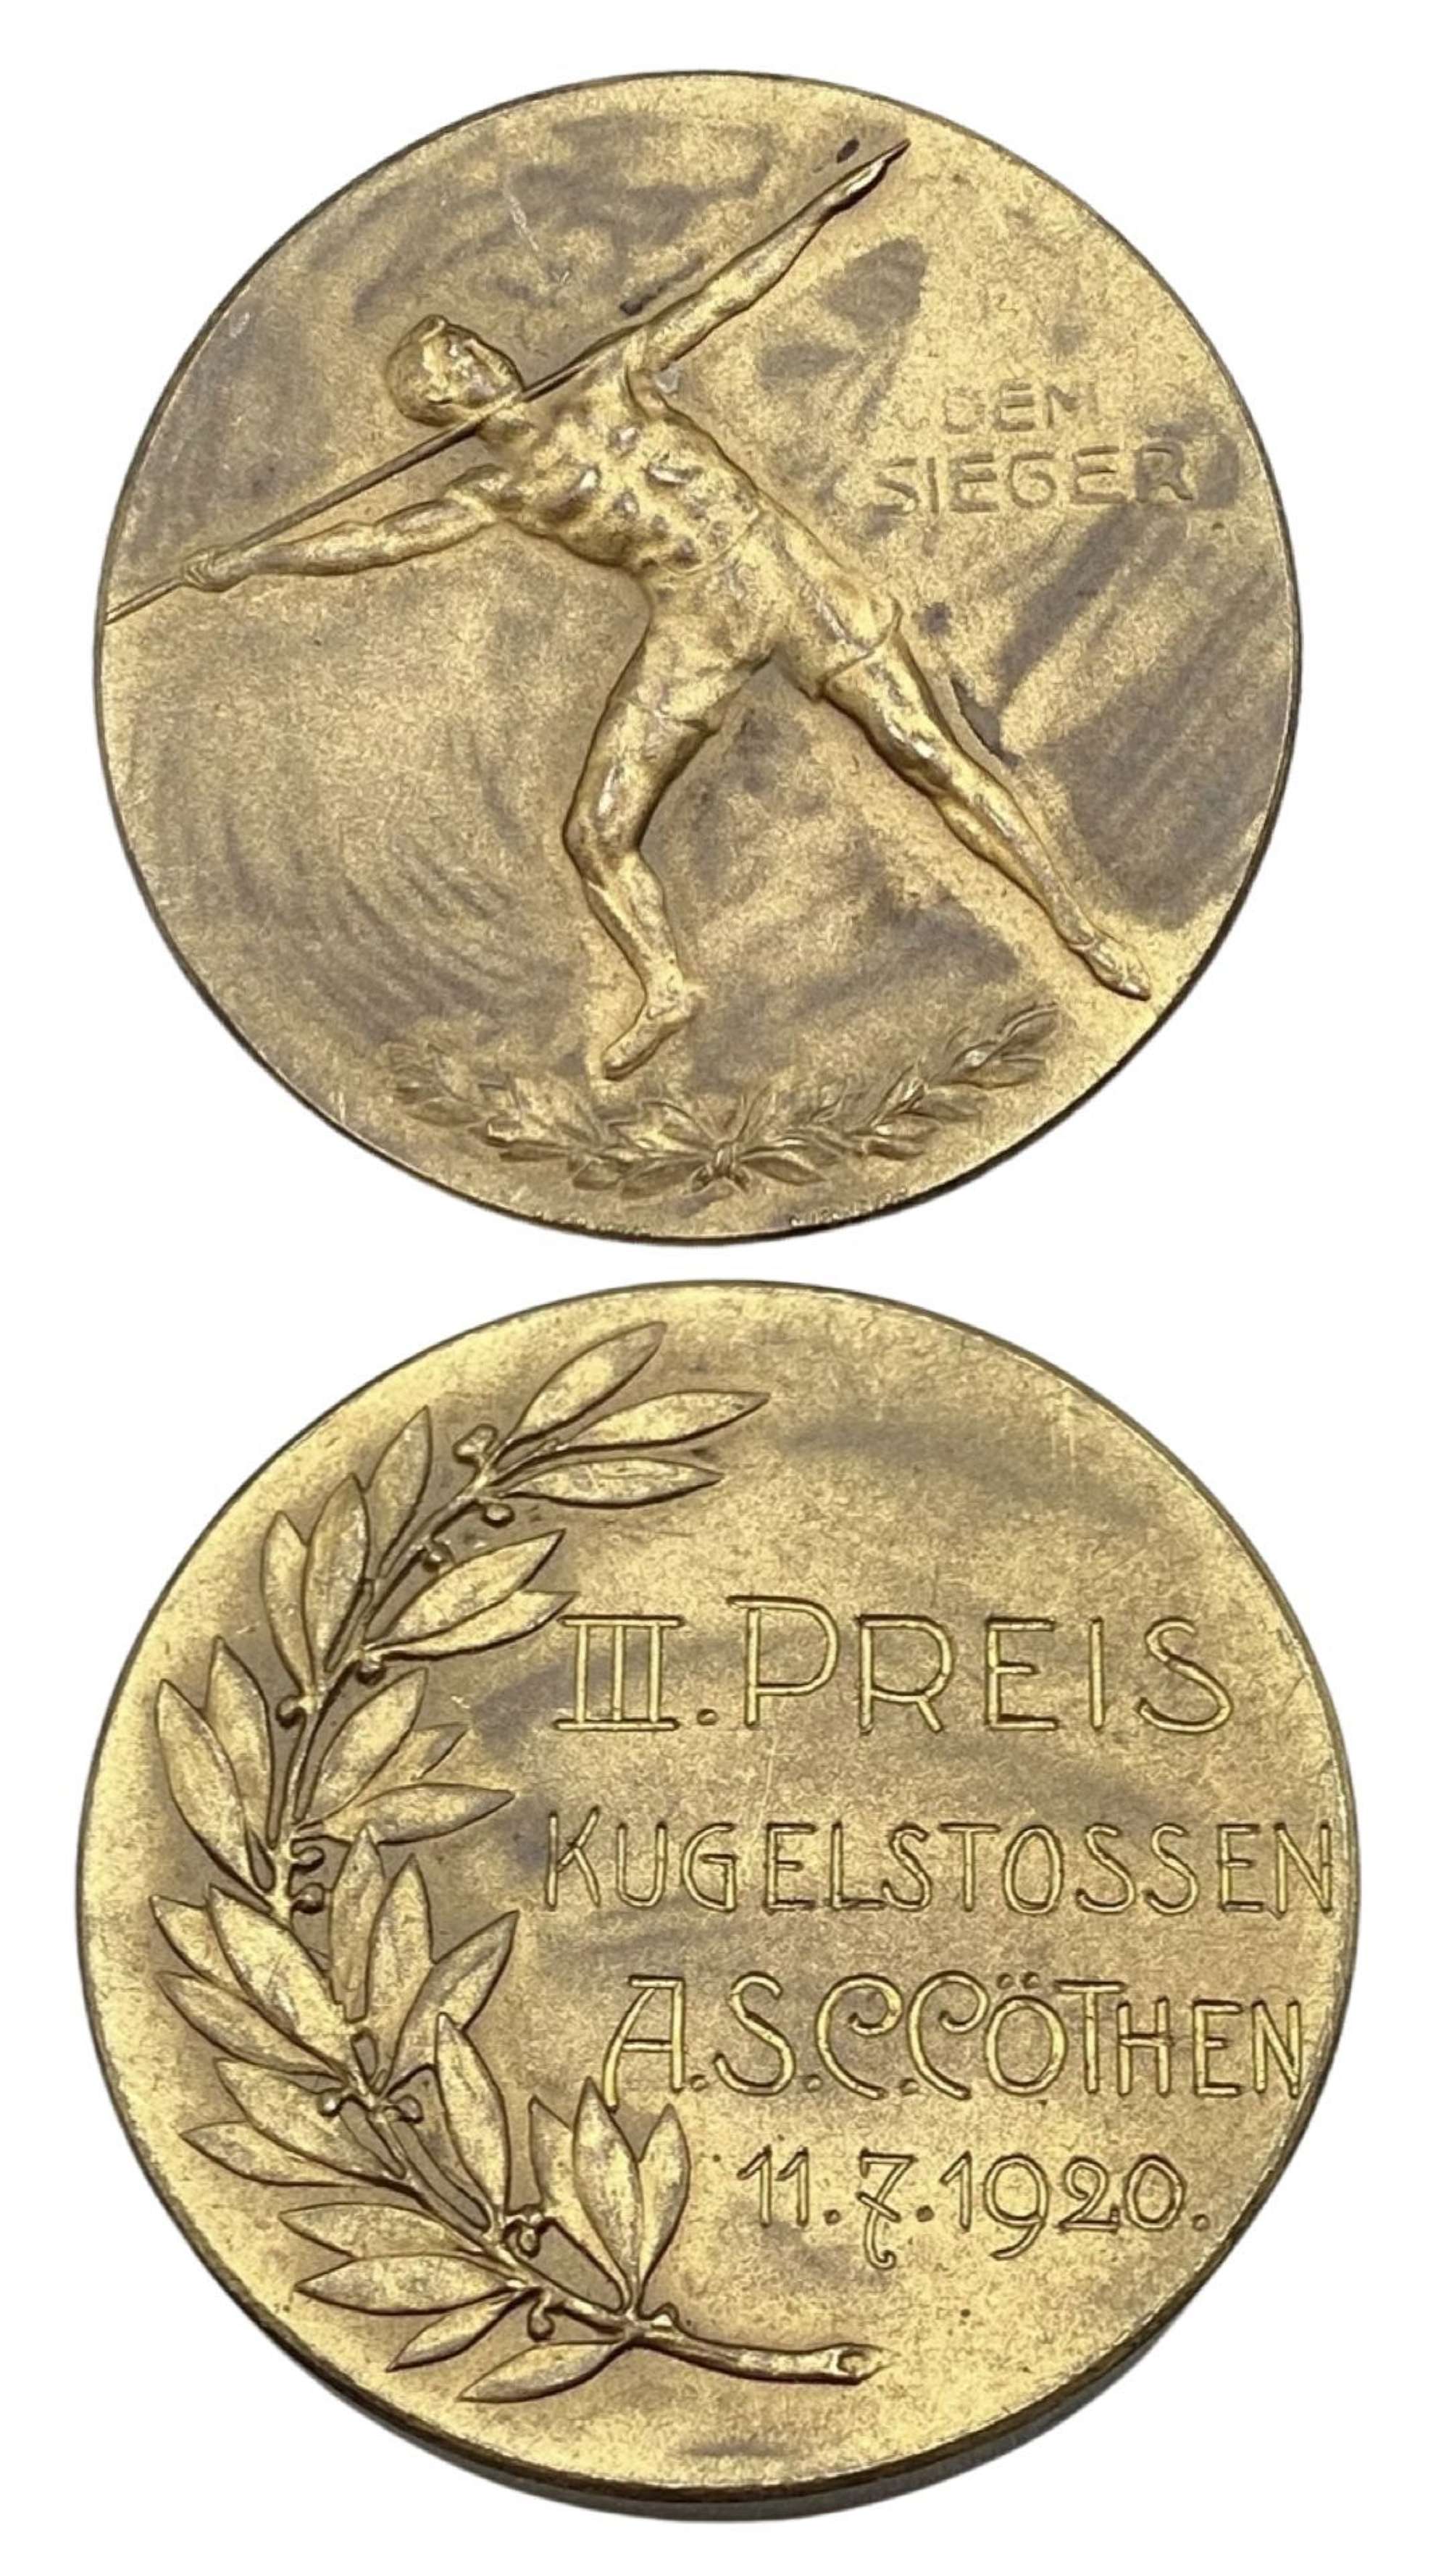 Pre WW1 German 3rd Place Medal For Shot Put A.S.C.Cothen 11.7.1920